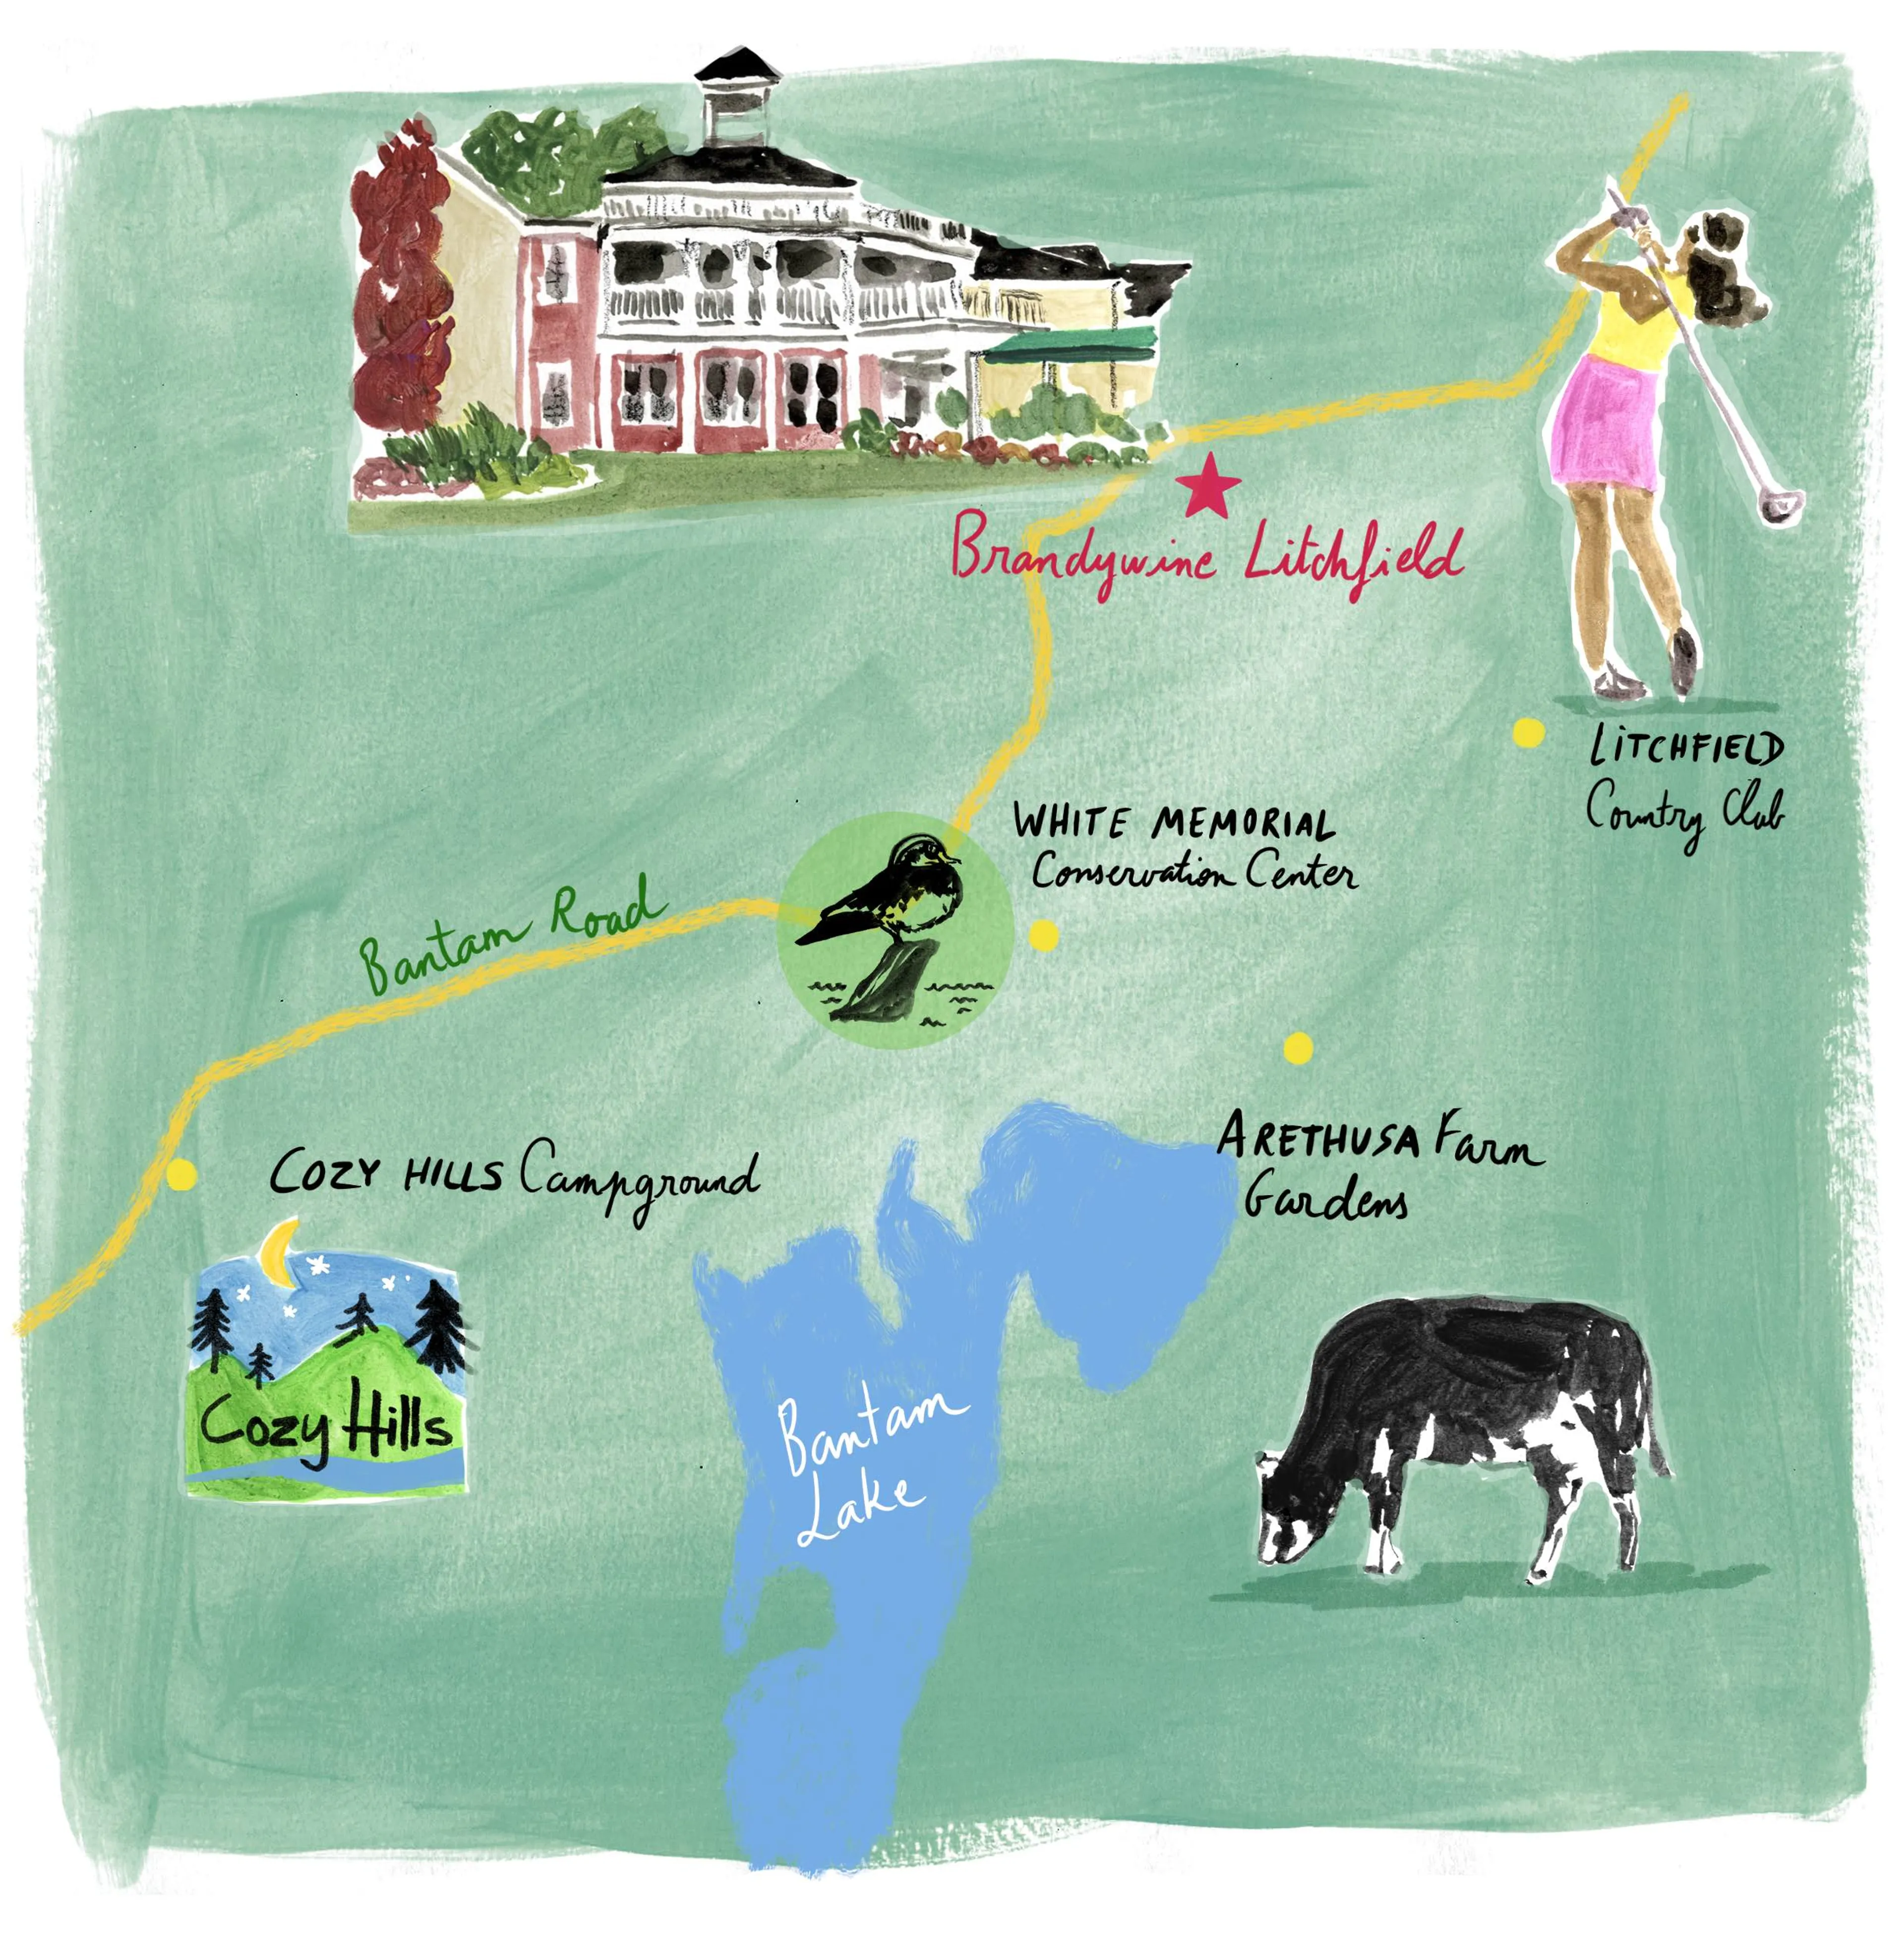 Hand-illustrated map of major landmarks surrounding Brandywine Litchfield in Litchfield, CT